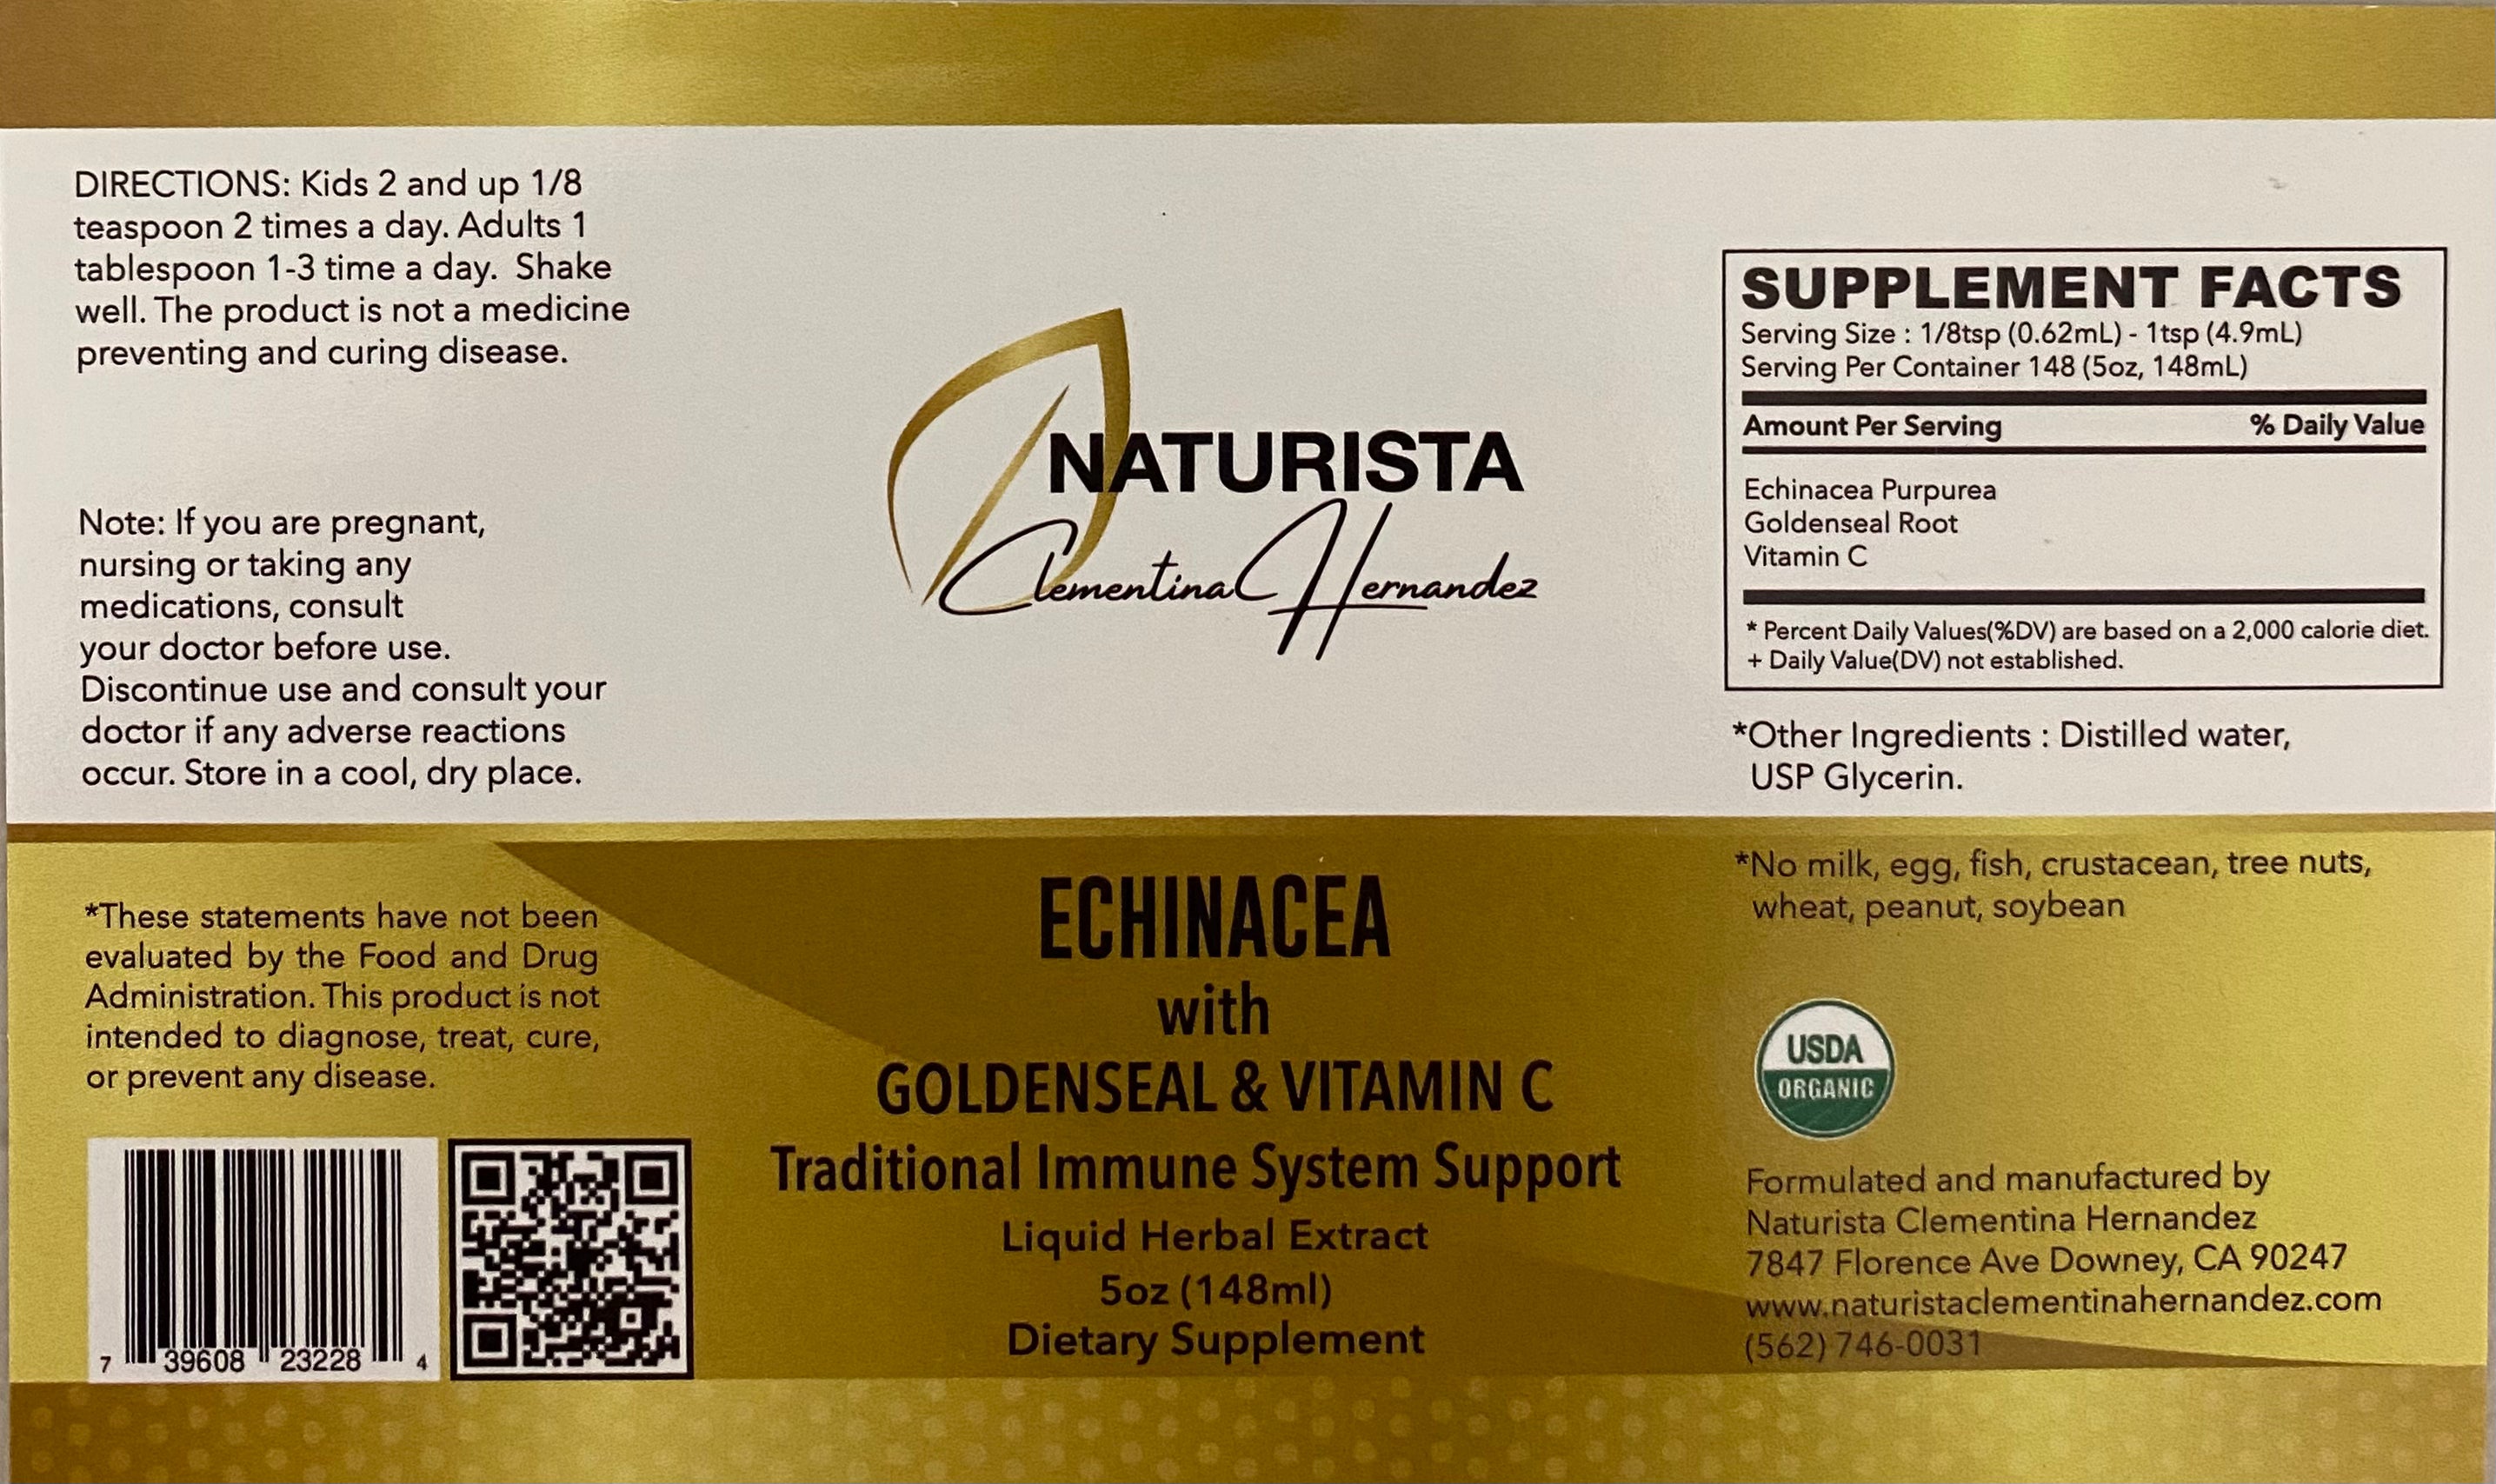 Echinacea Golden Seal & Vitamin C